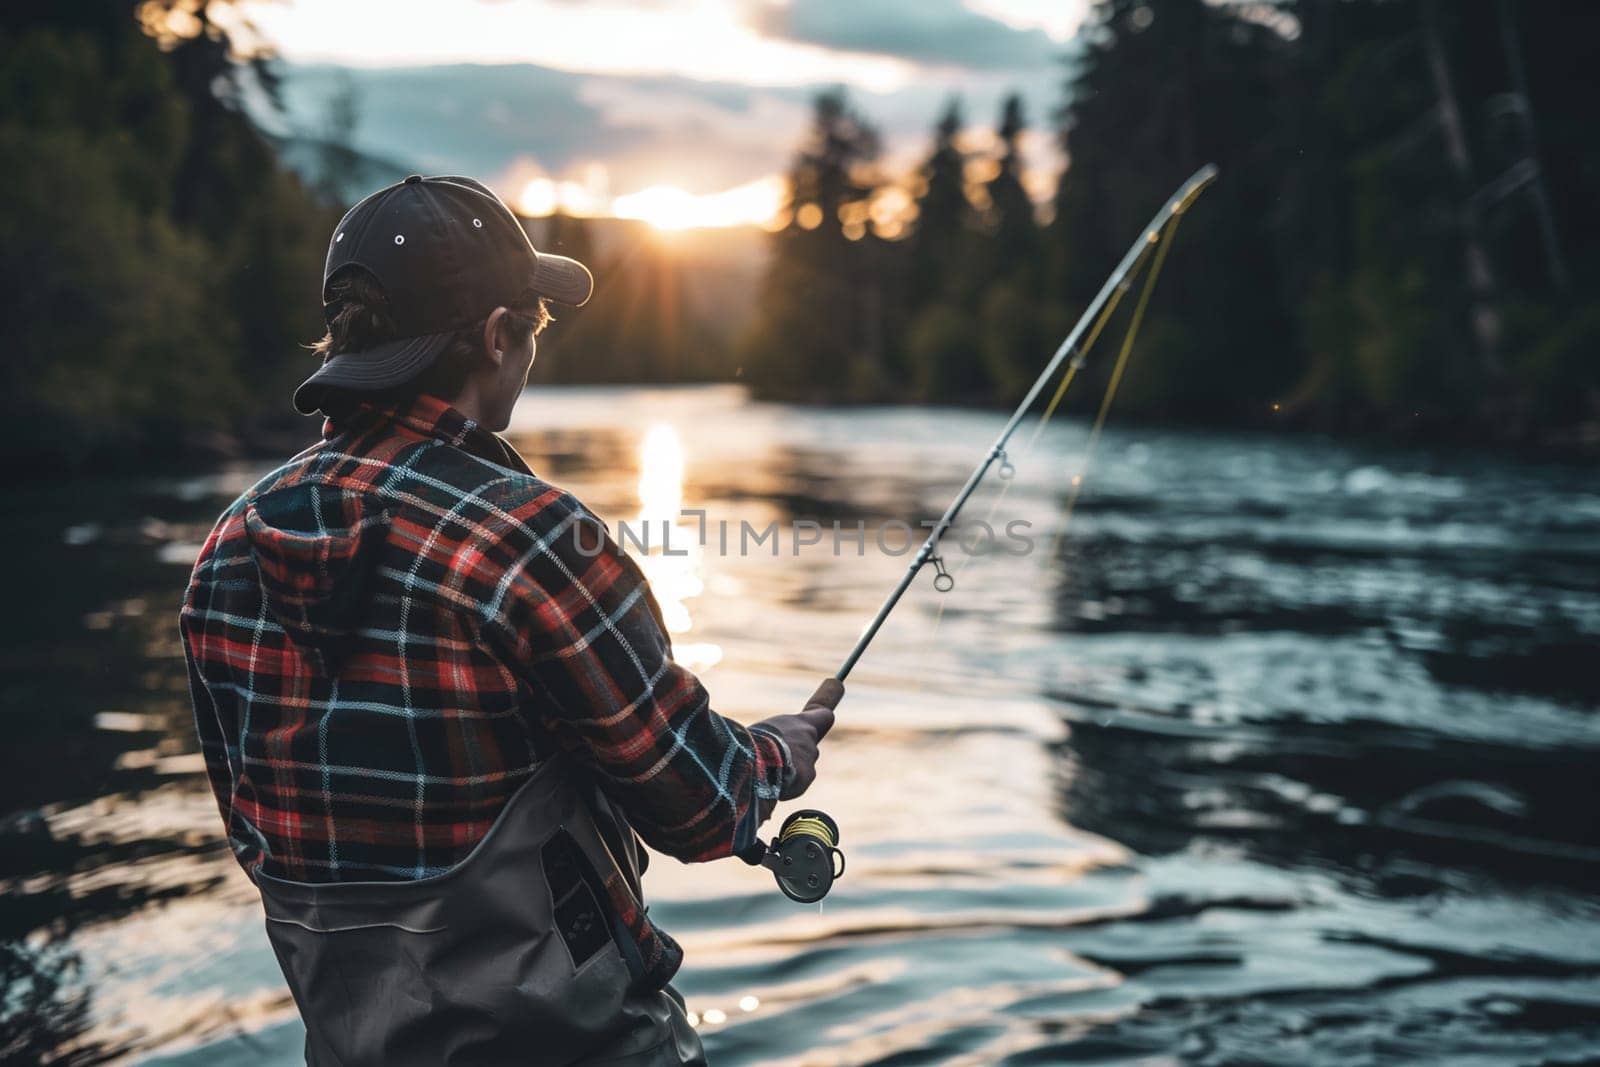 Solo fisherman stands river catching fish sunset. Man wearing plaid-shirt fishing calmly peaceful water setting sun.